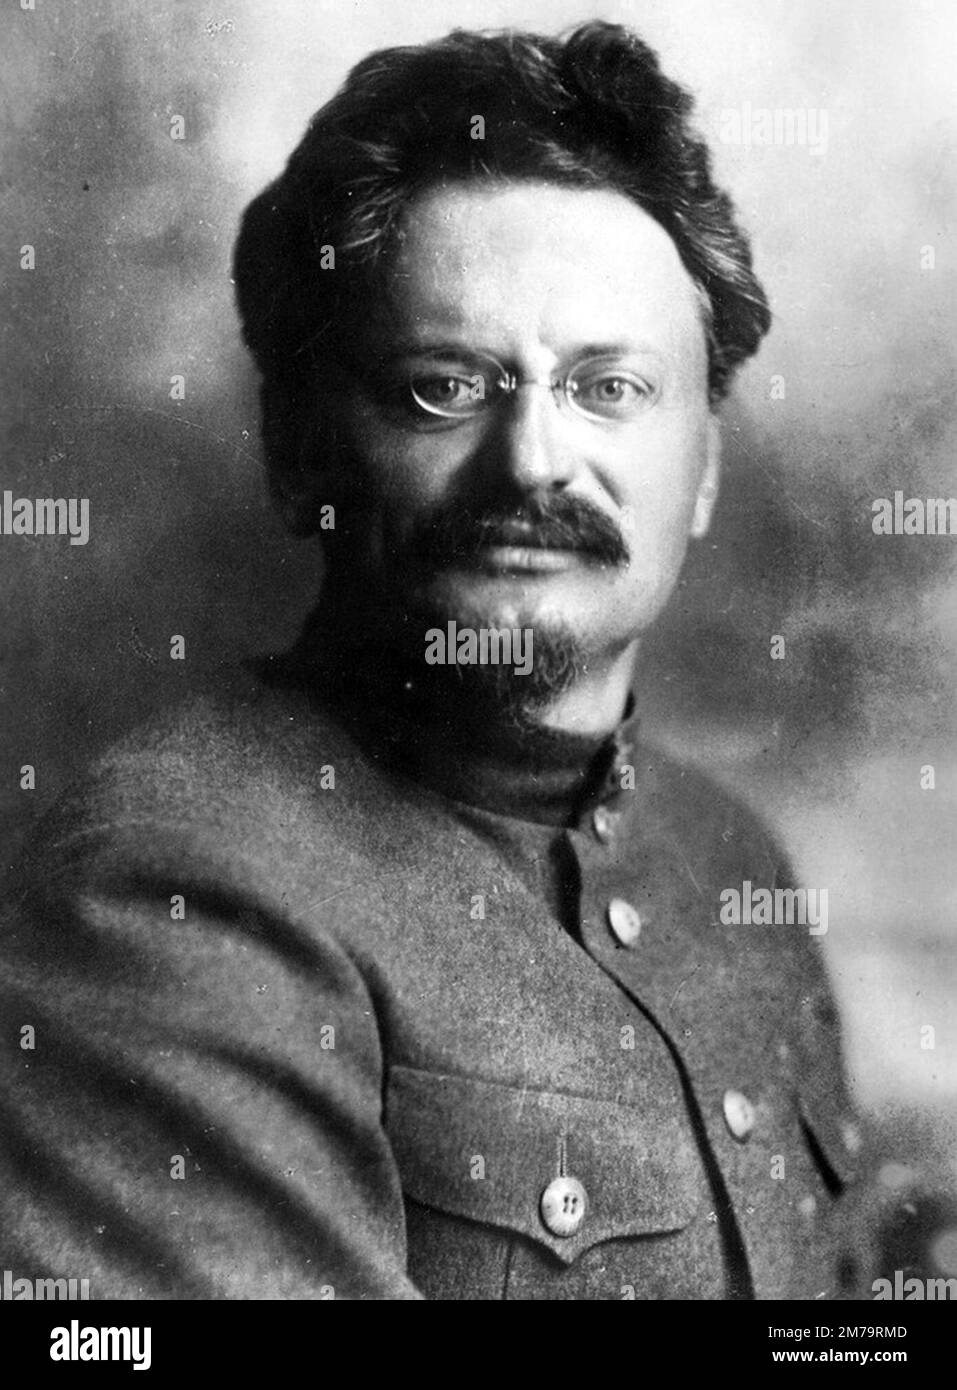 Leon Trotsky, Lev Davidovich Bronstein (1879 – 1940), Leon Trotsky Russian revolutionary, political theorist and politician. Stock Photo